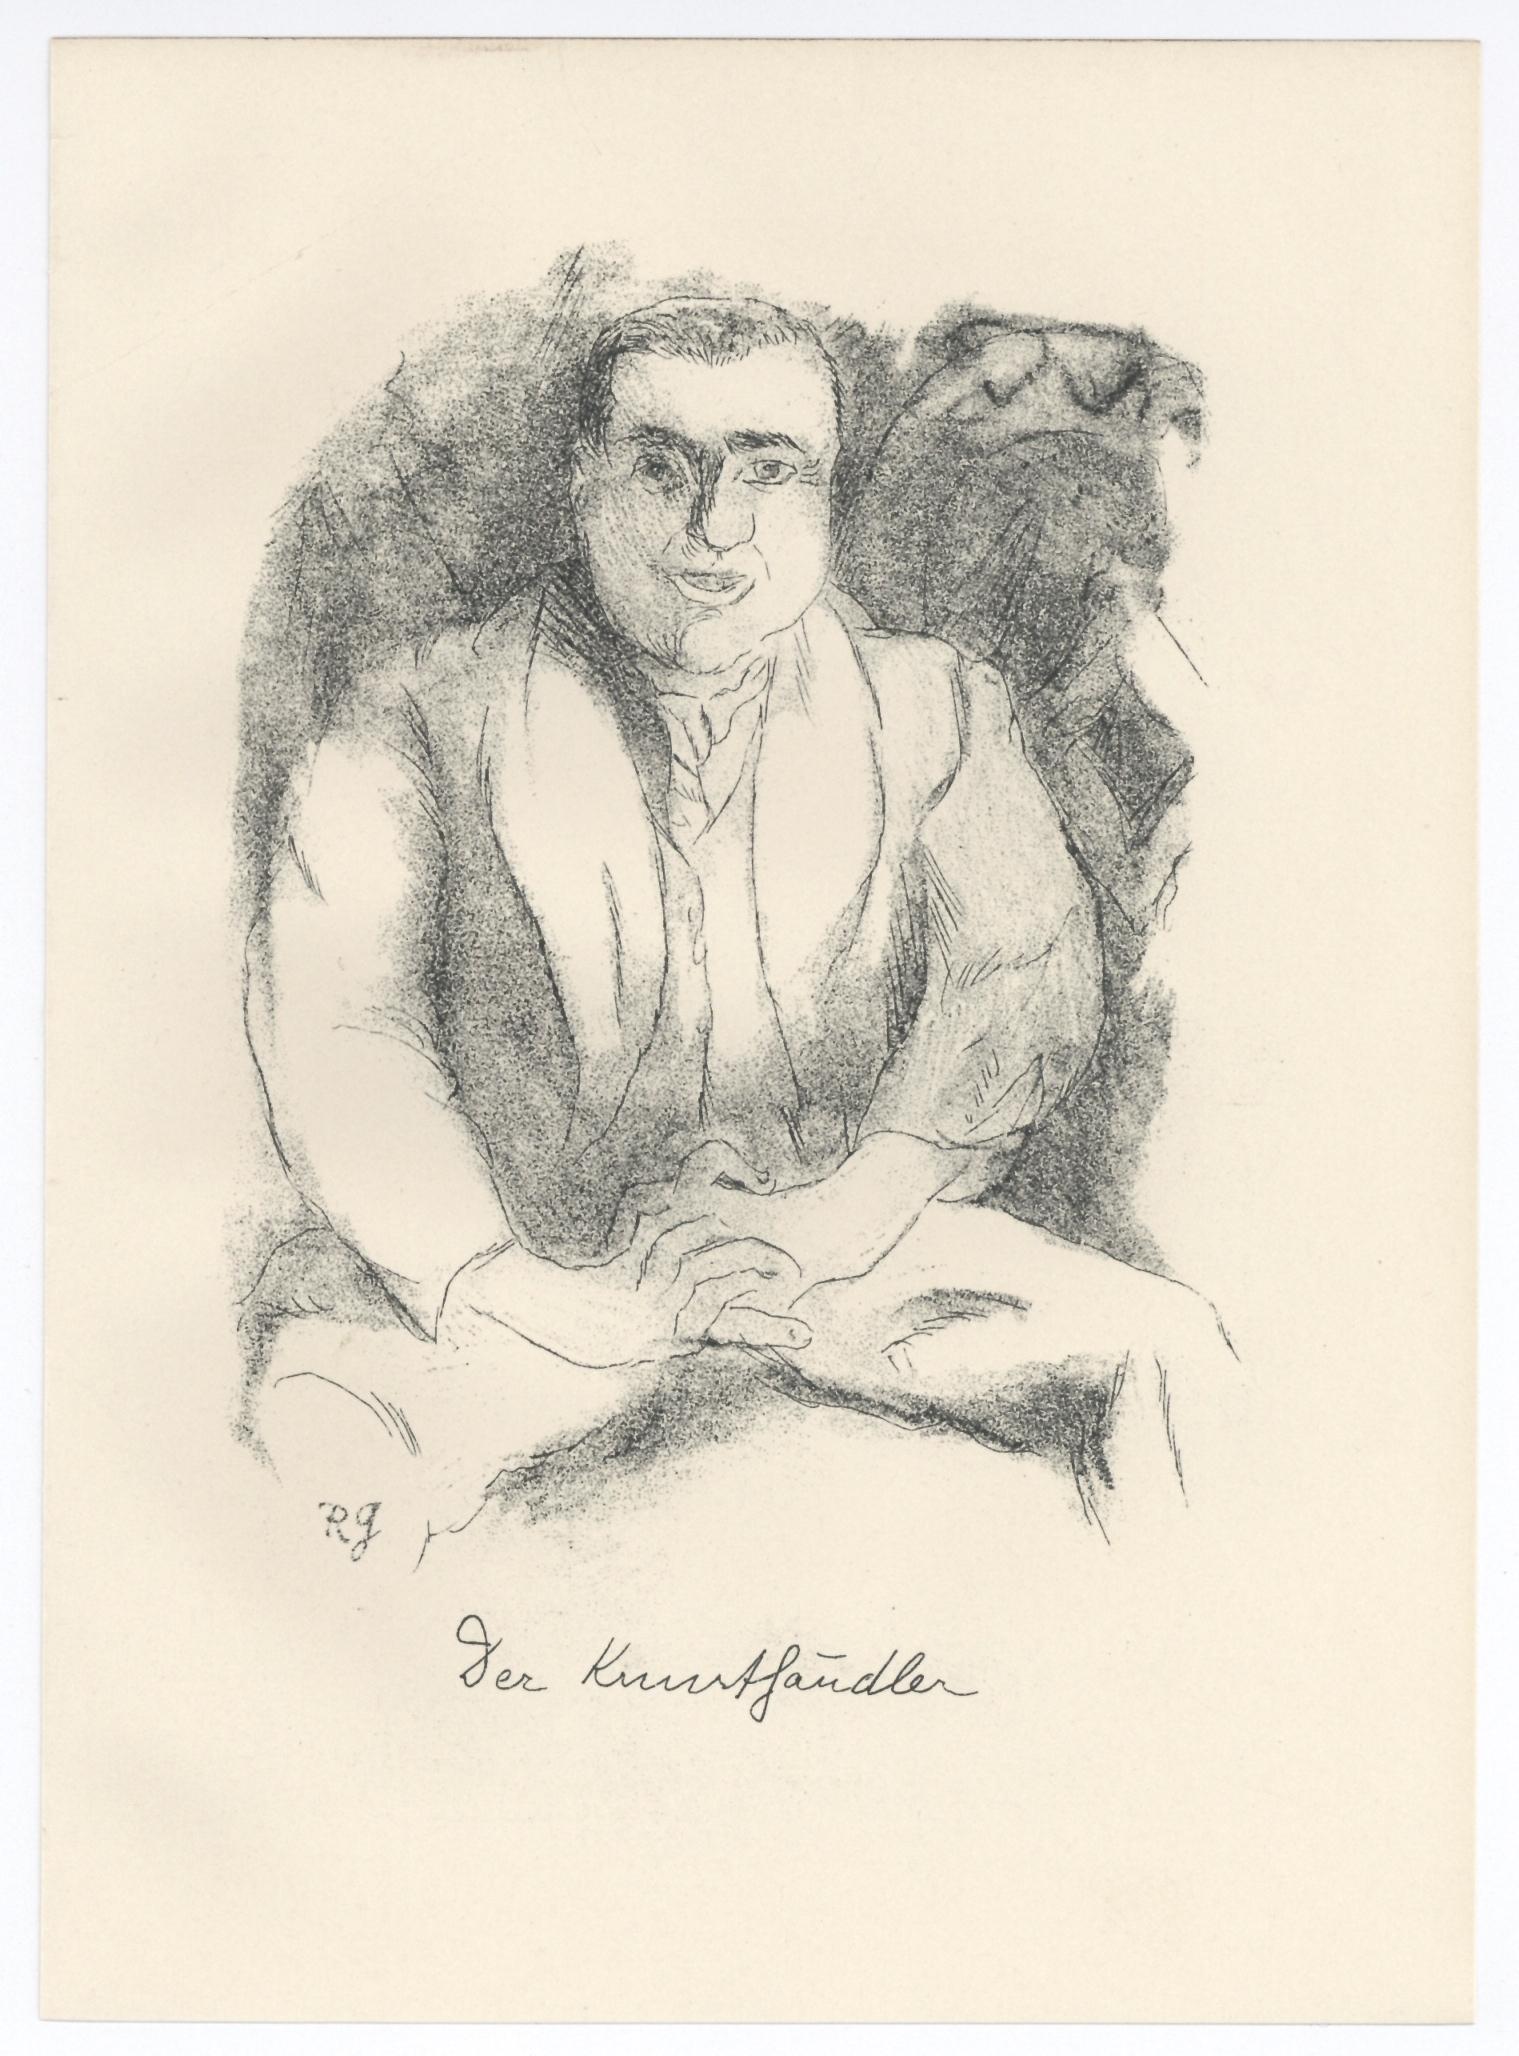 "Der Kunsthandler" original lithograph - Print by Rudolf Grossmann